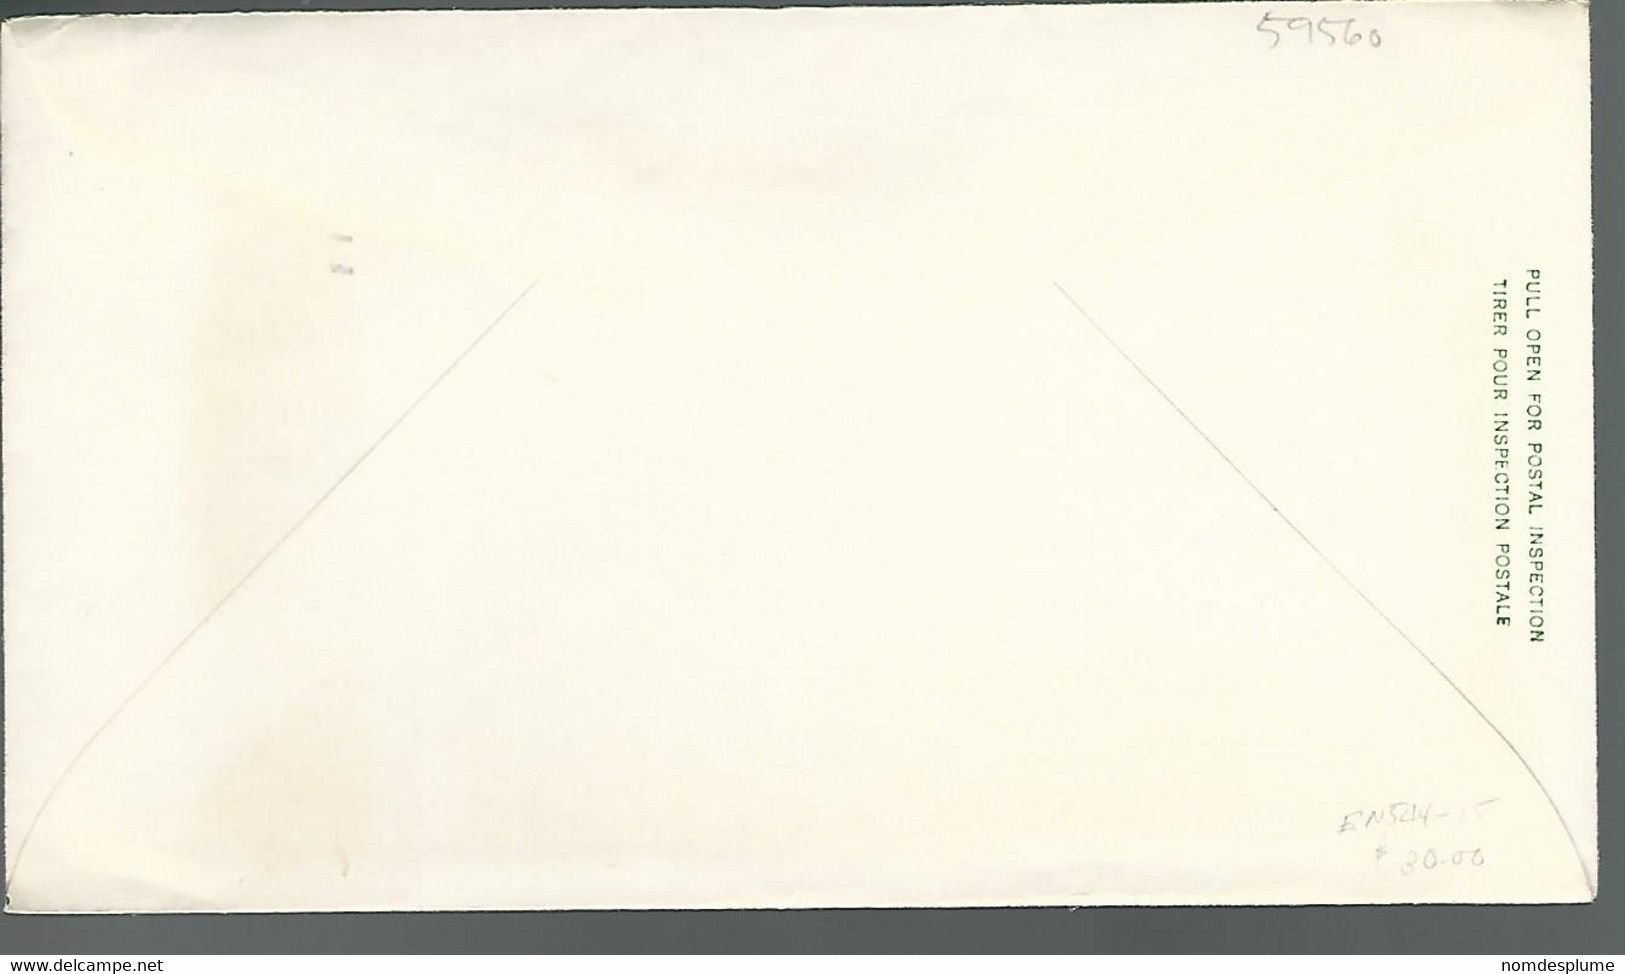 59560) Canada Precancel Postmark Cancel Vancouver 1963 - Precancels